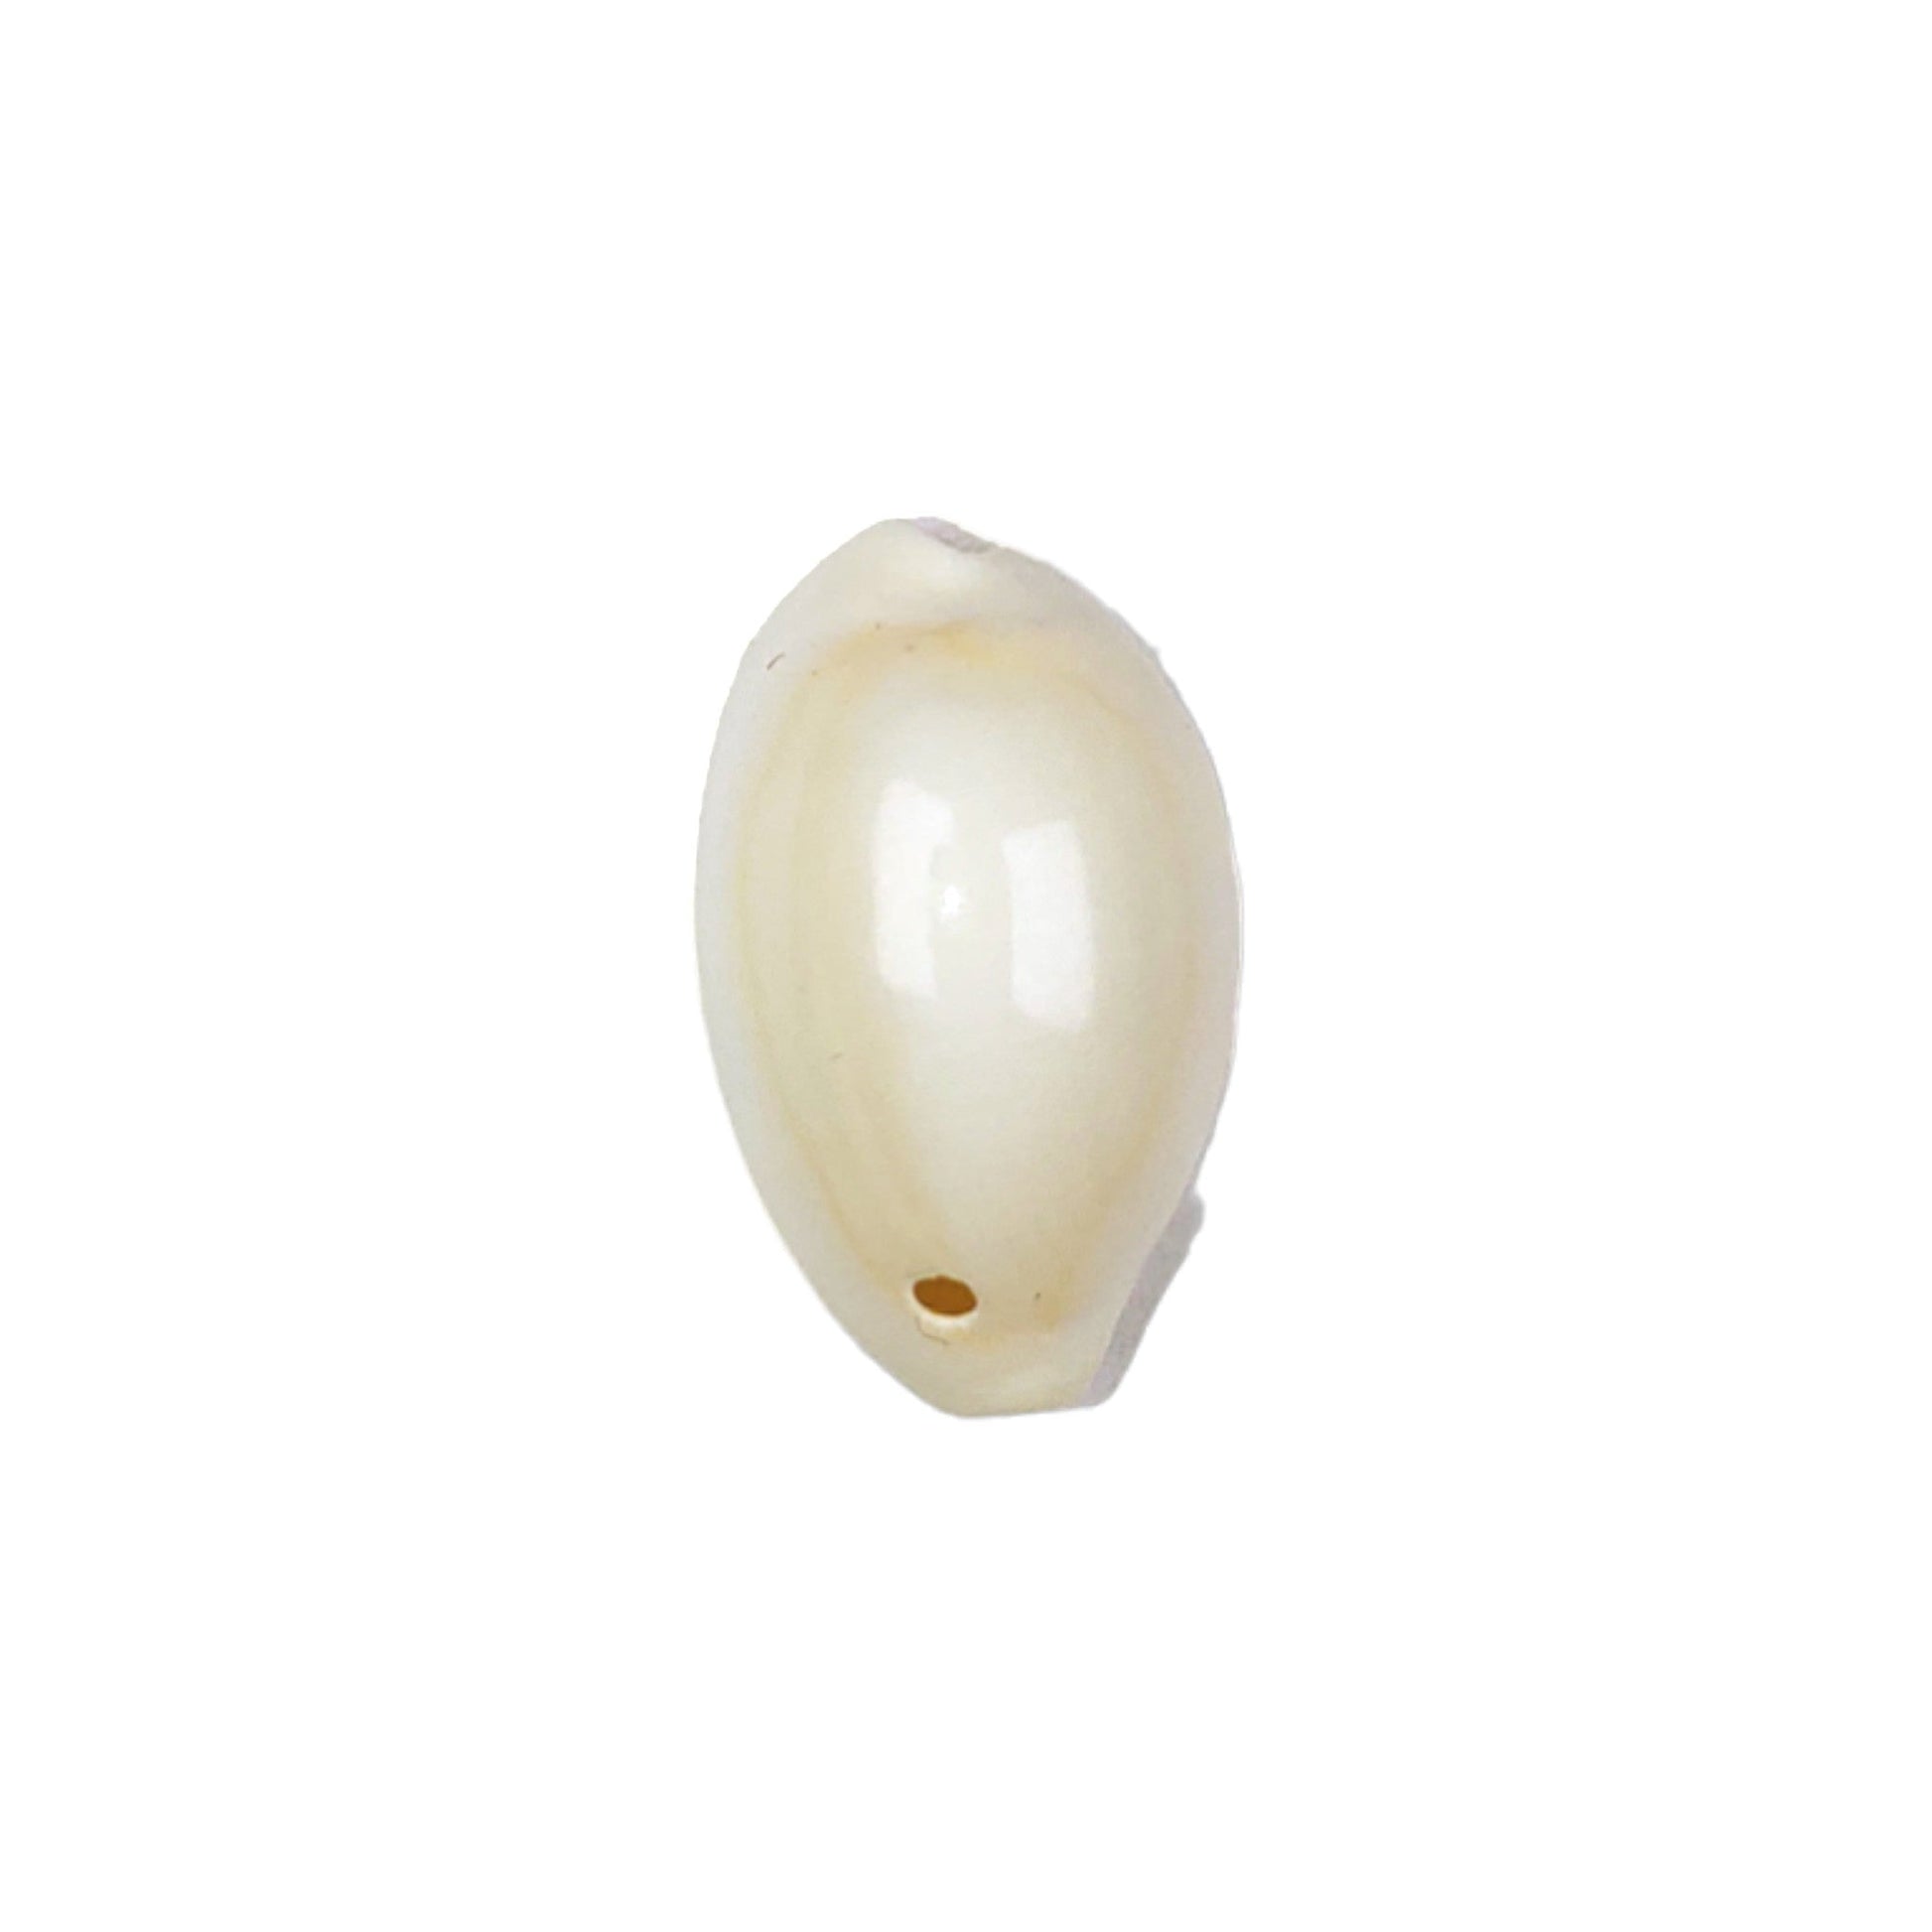 India Petals White Shell Shape Kodi/Kauri Stone Motif for Crafting or Decoration, Jewelry Making, 